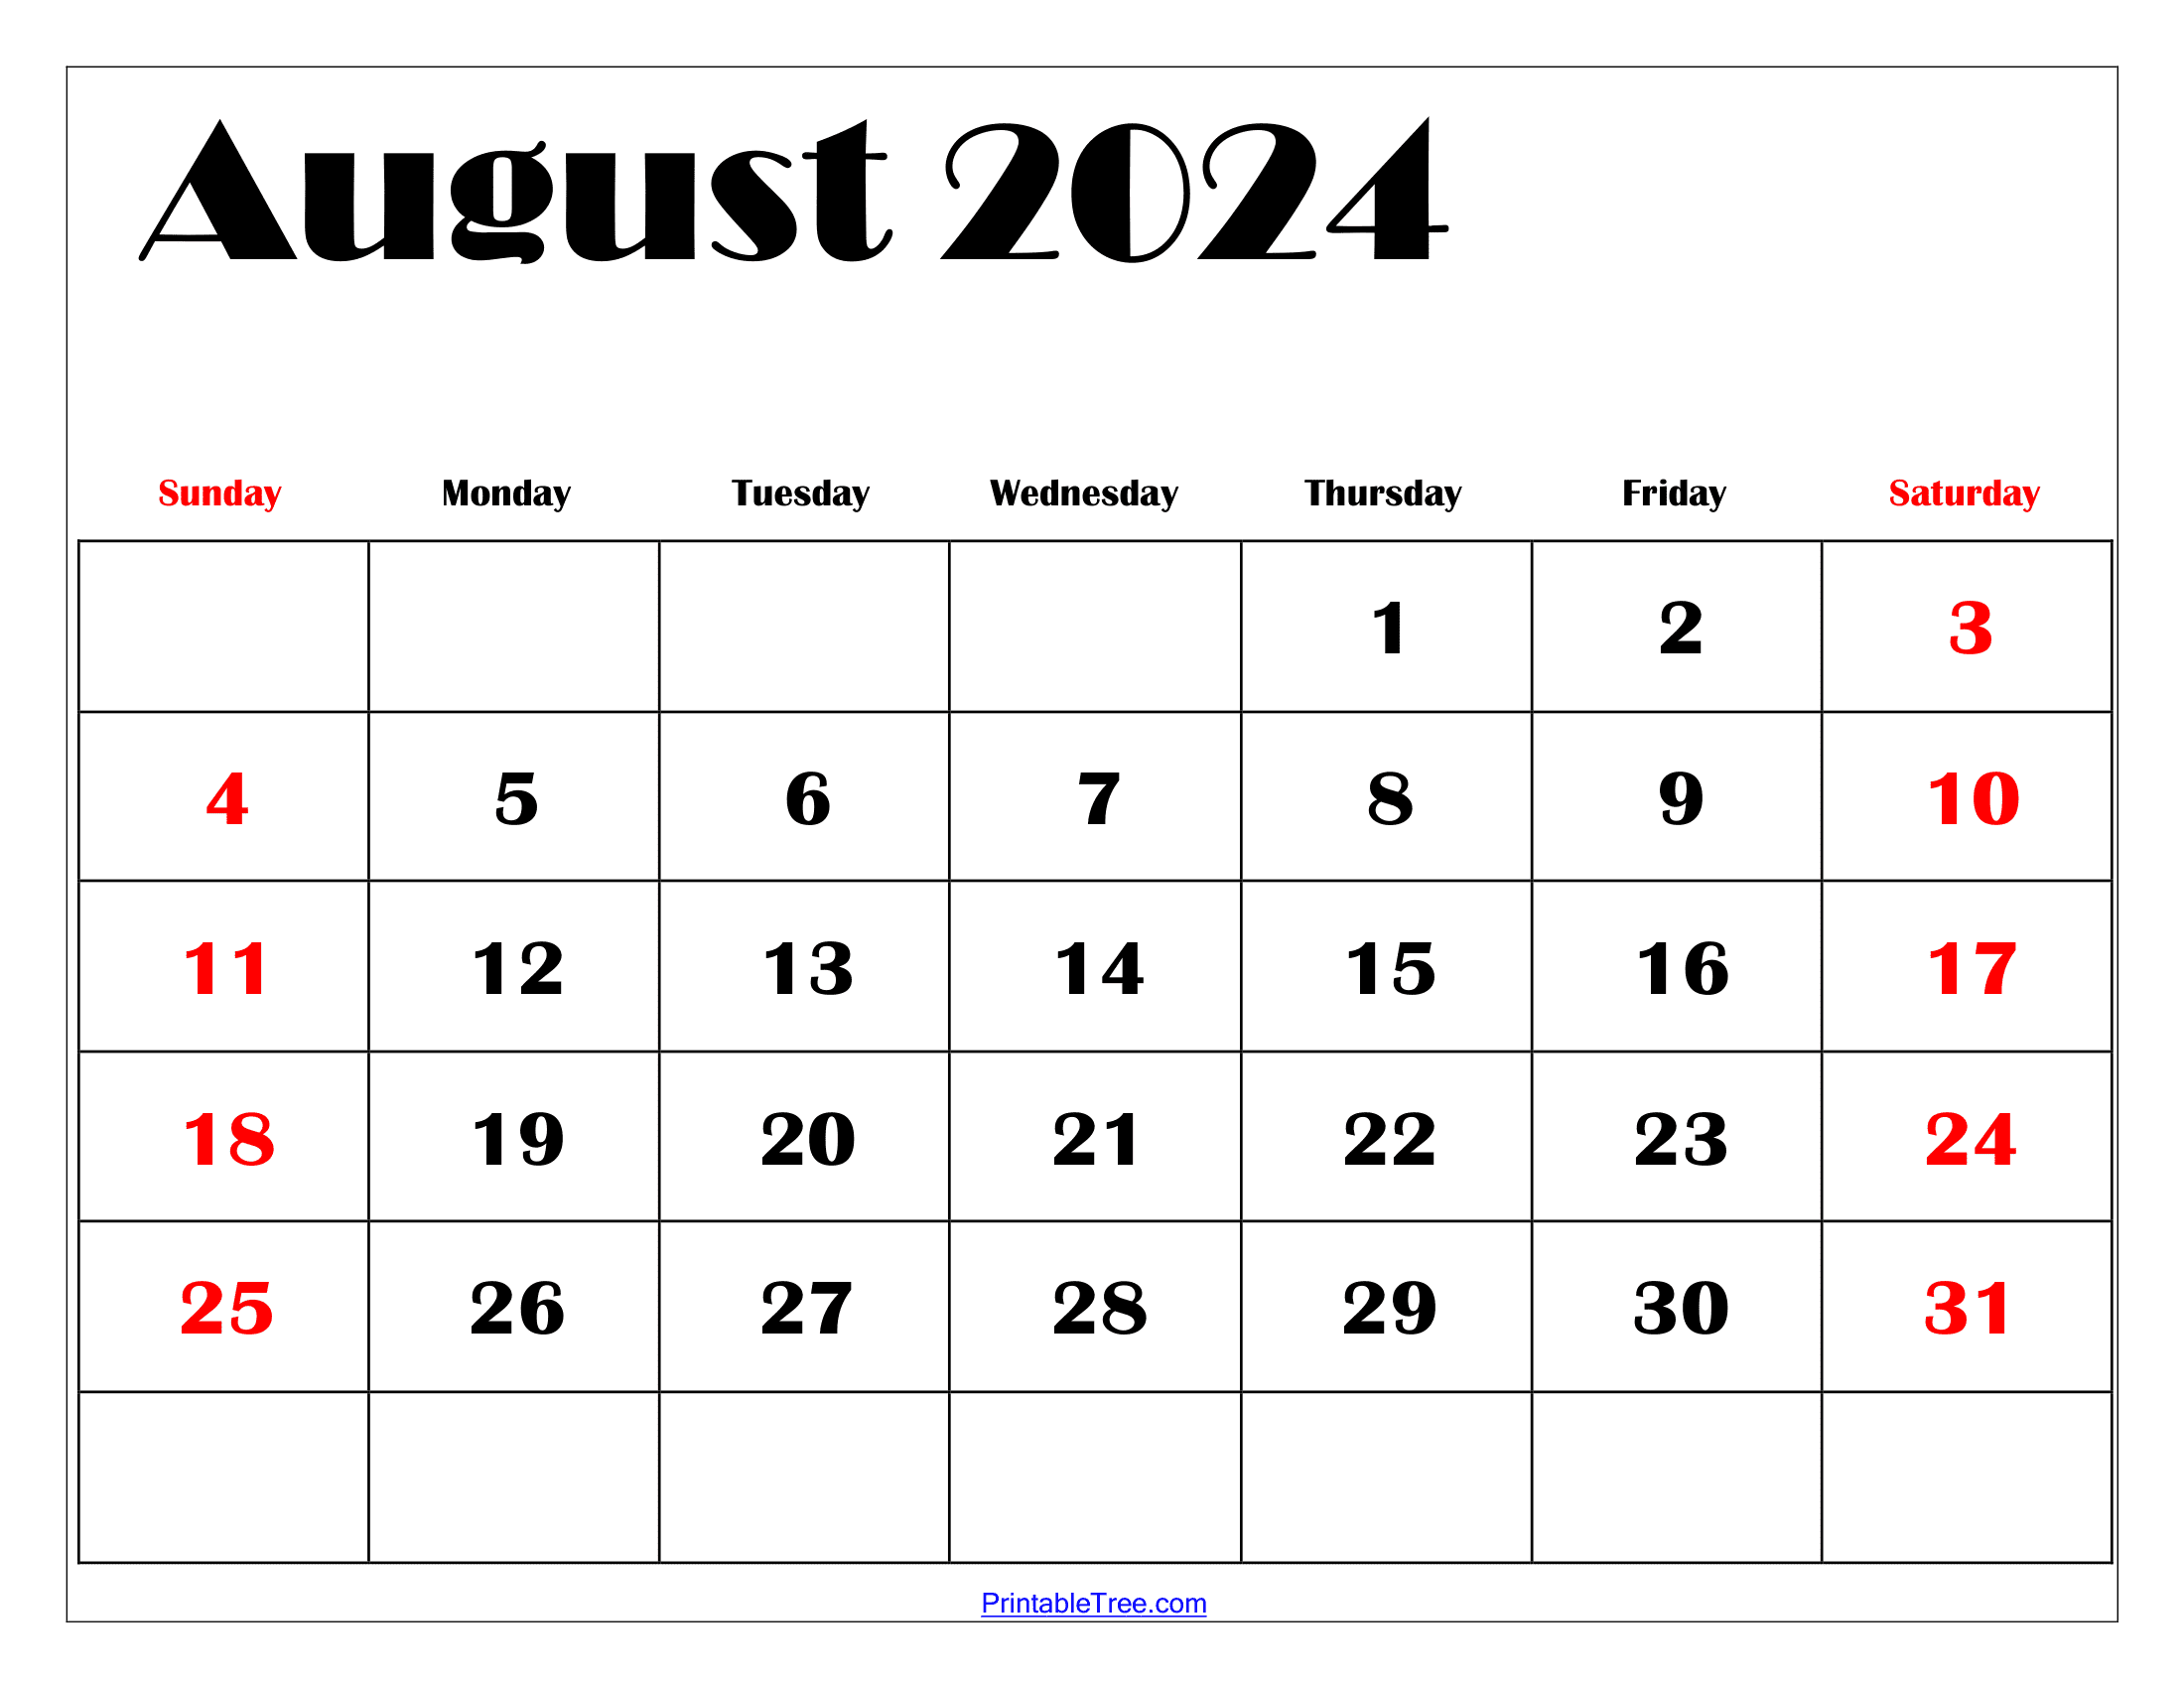 August 2024 Calendar Printable Pdf Templates Free Download with Free Printable Calendar 2024 August With Holidays